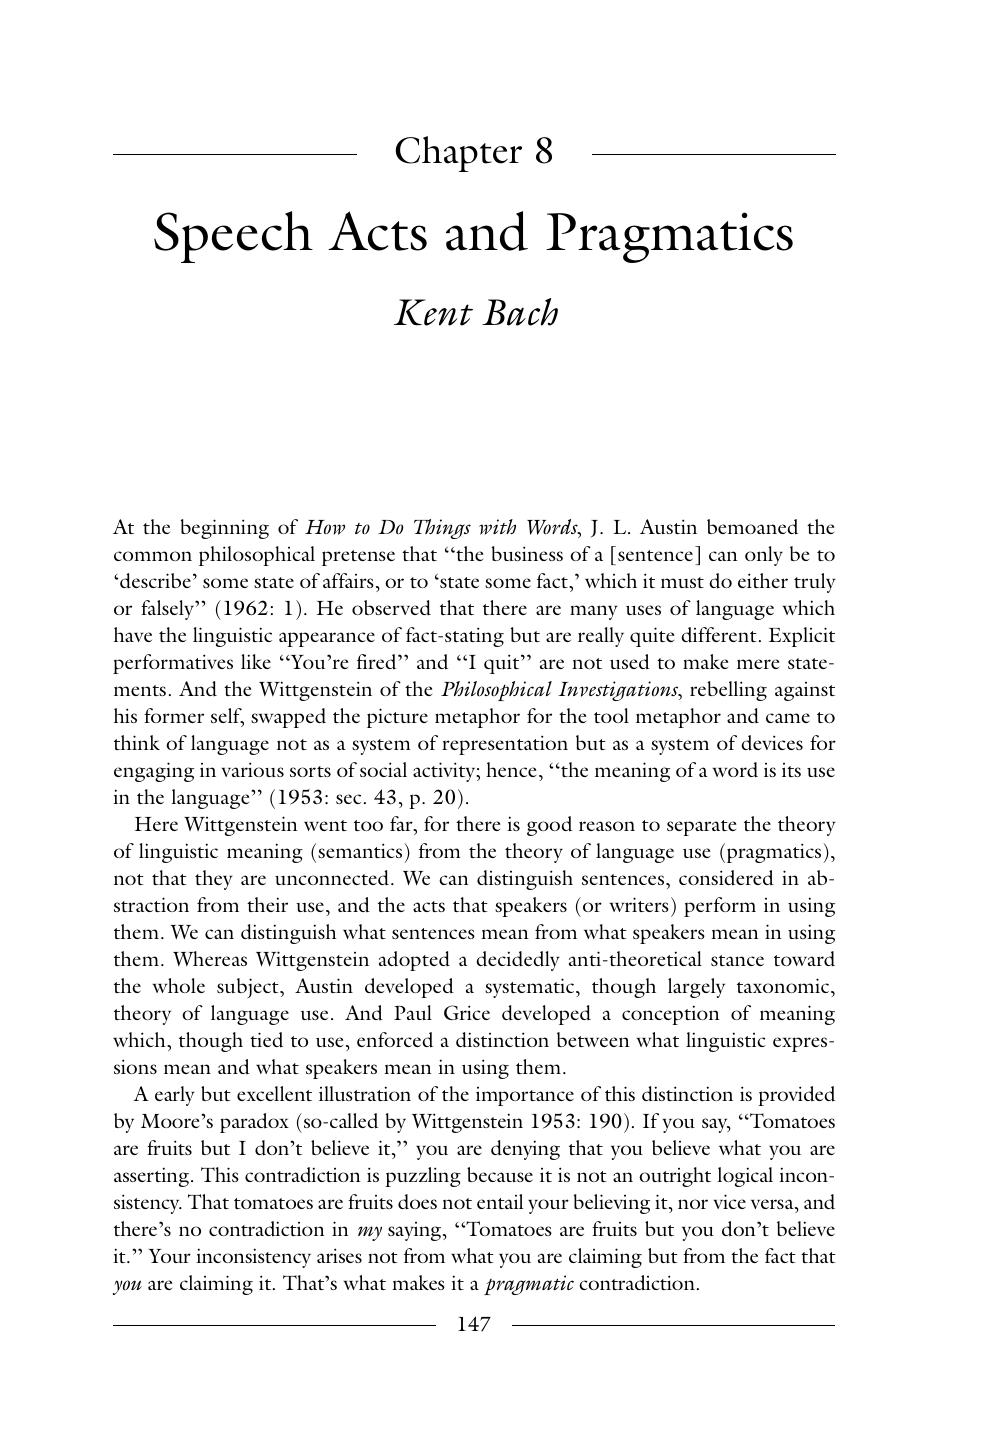 Speech Acts and Pragmatics - Chapter 8